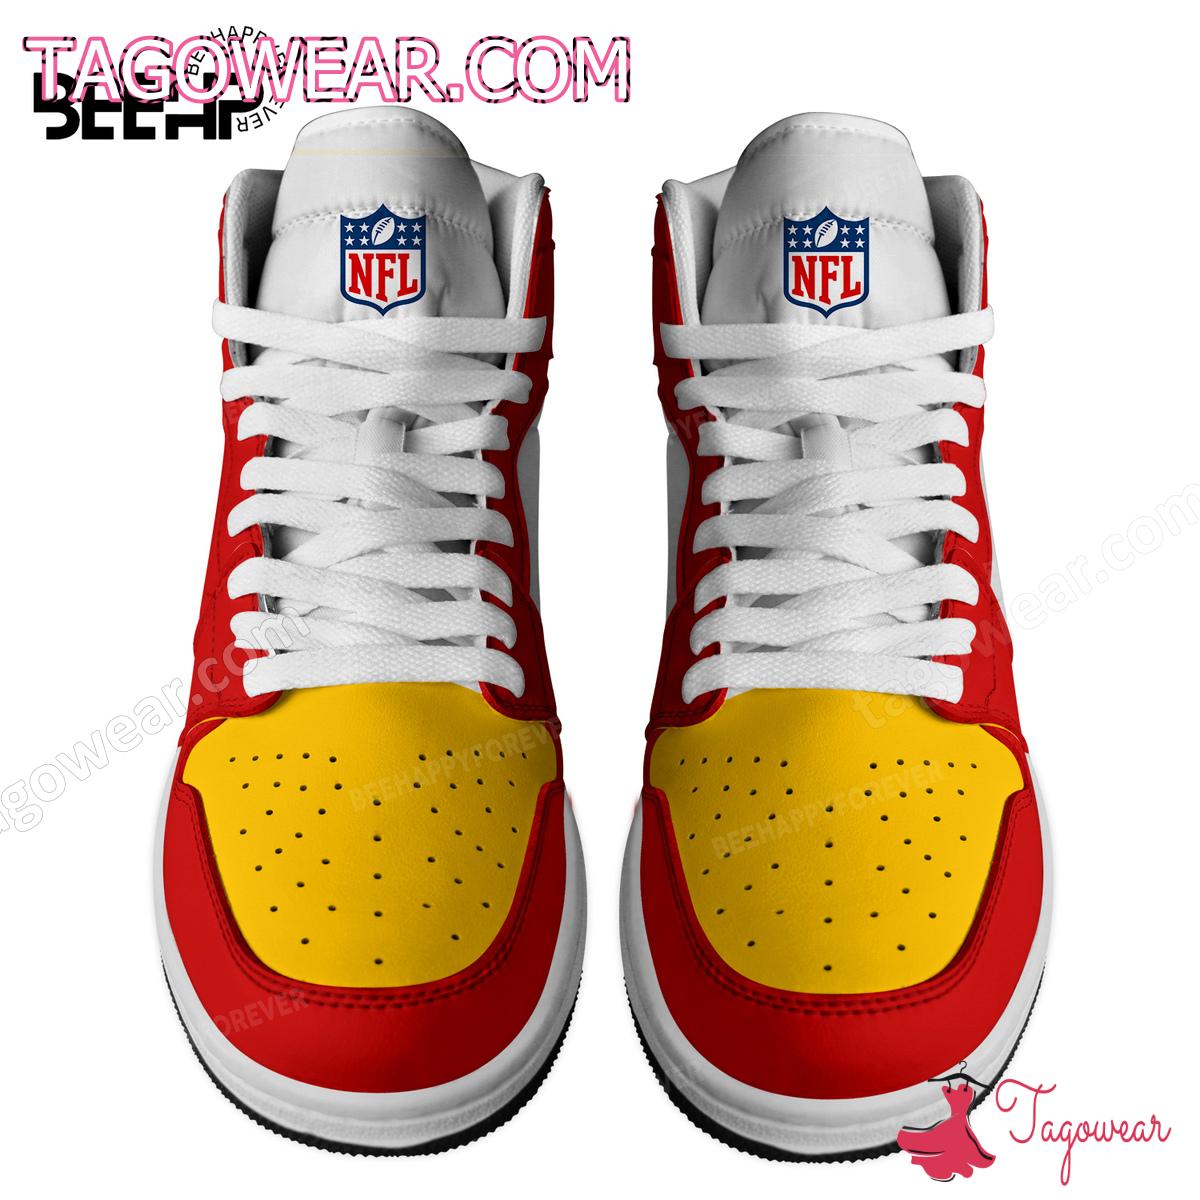 Kansas City Chiefs Lvii Super Bowl Champions Personalized Air Jordan High Top Shoes a